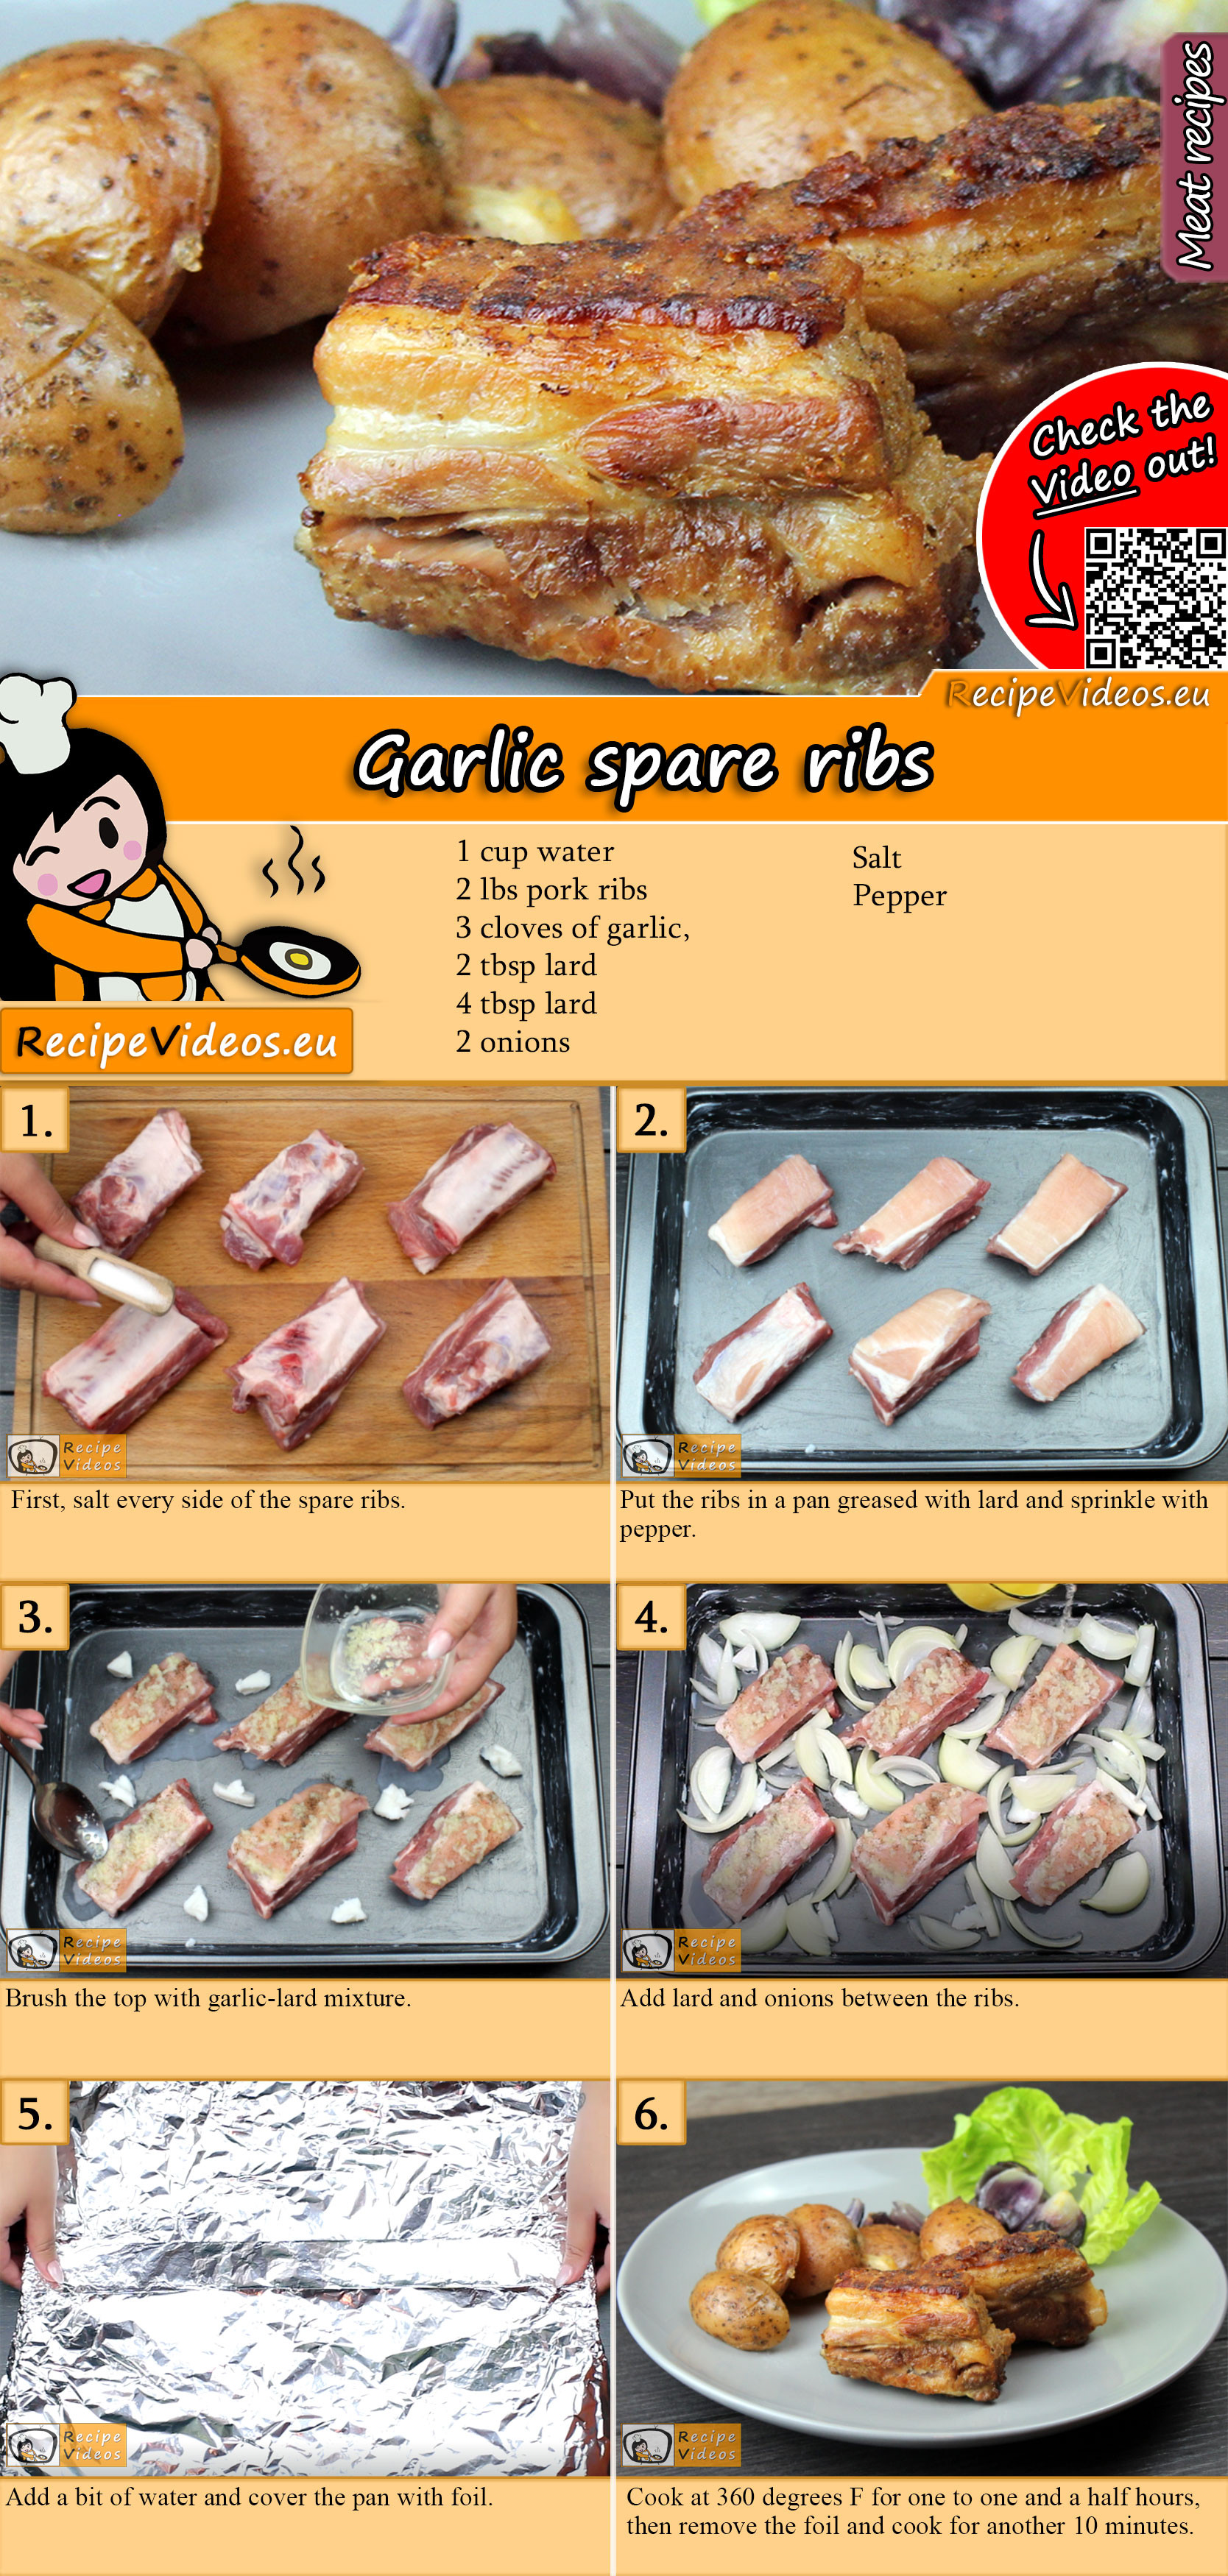 Garlic spare ribs recipe with video